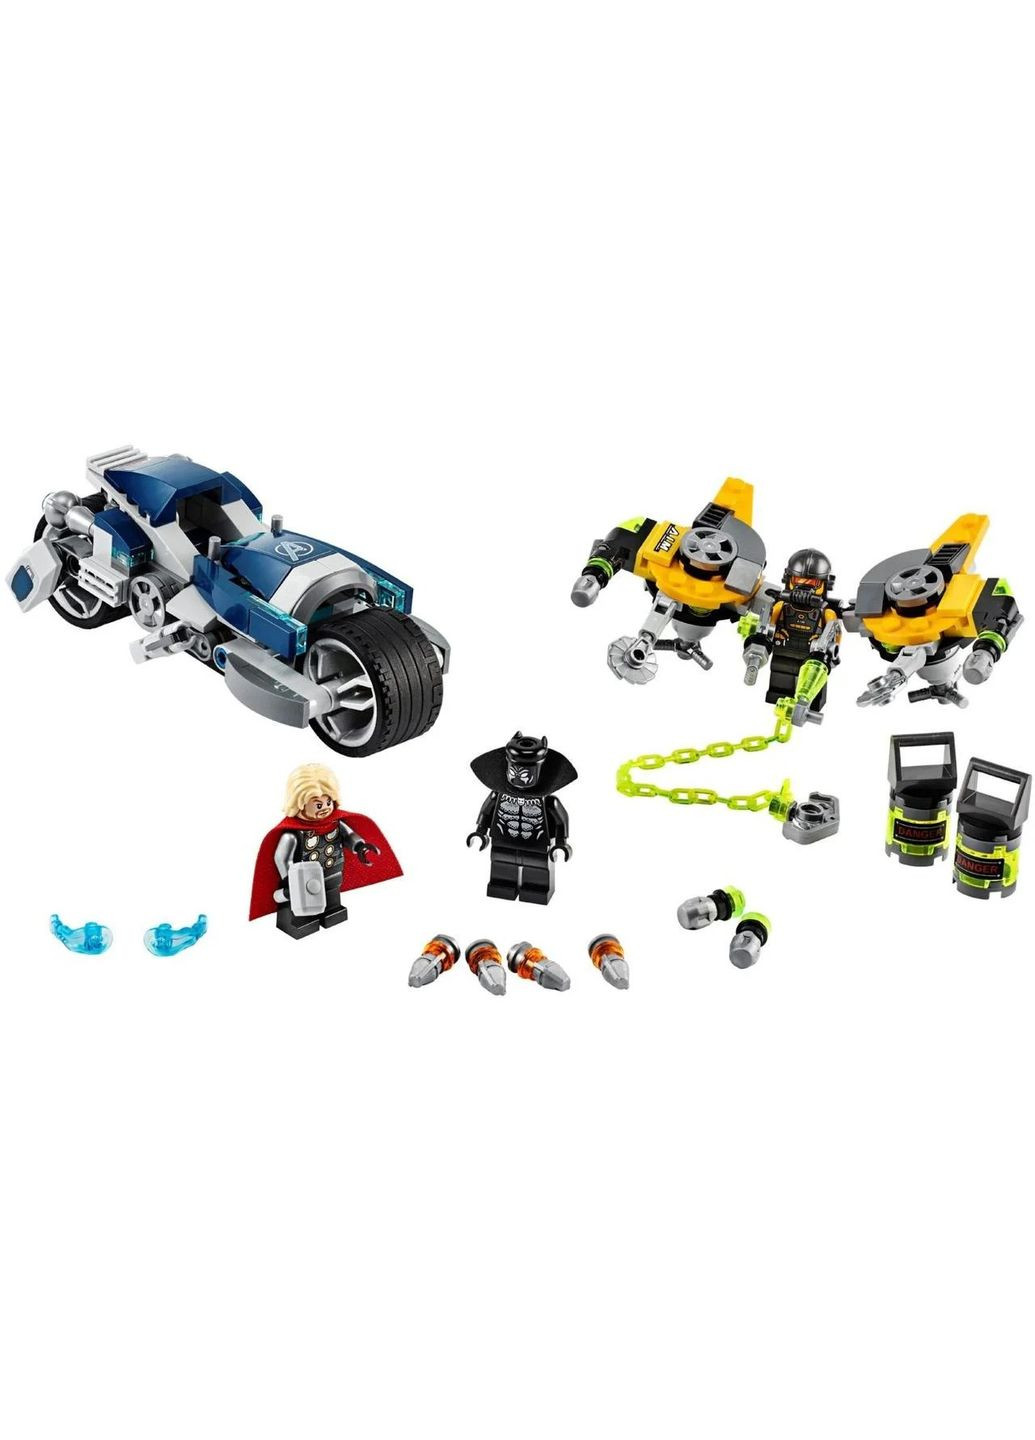 Конструктор Marvel Super Heroes Avengers Speeder Bike Attack Мстители: Атака на спортбайке (76142) Lego (292324081)